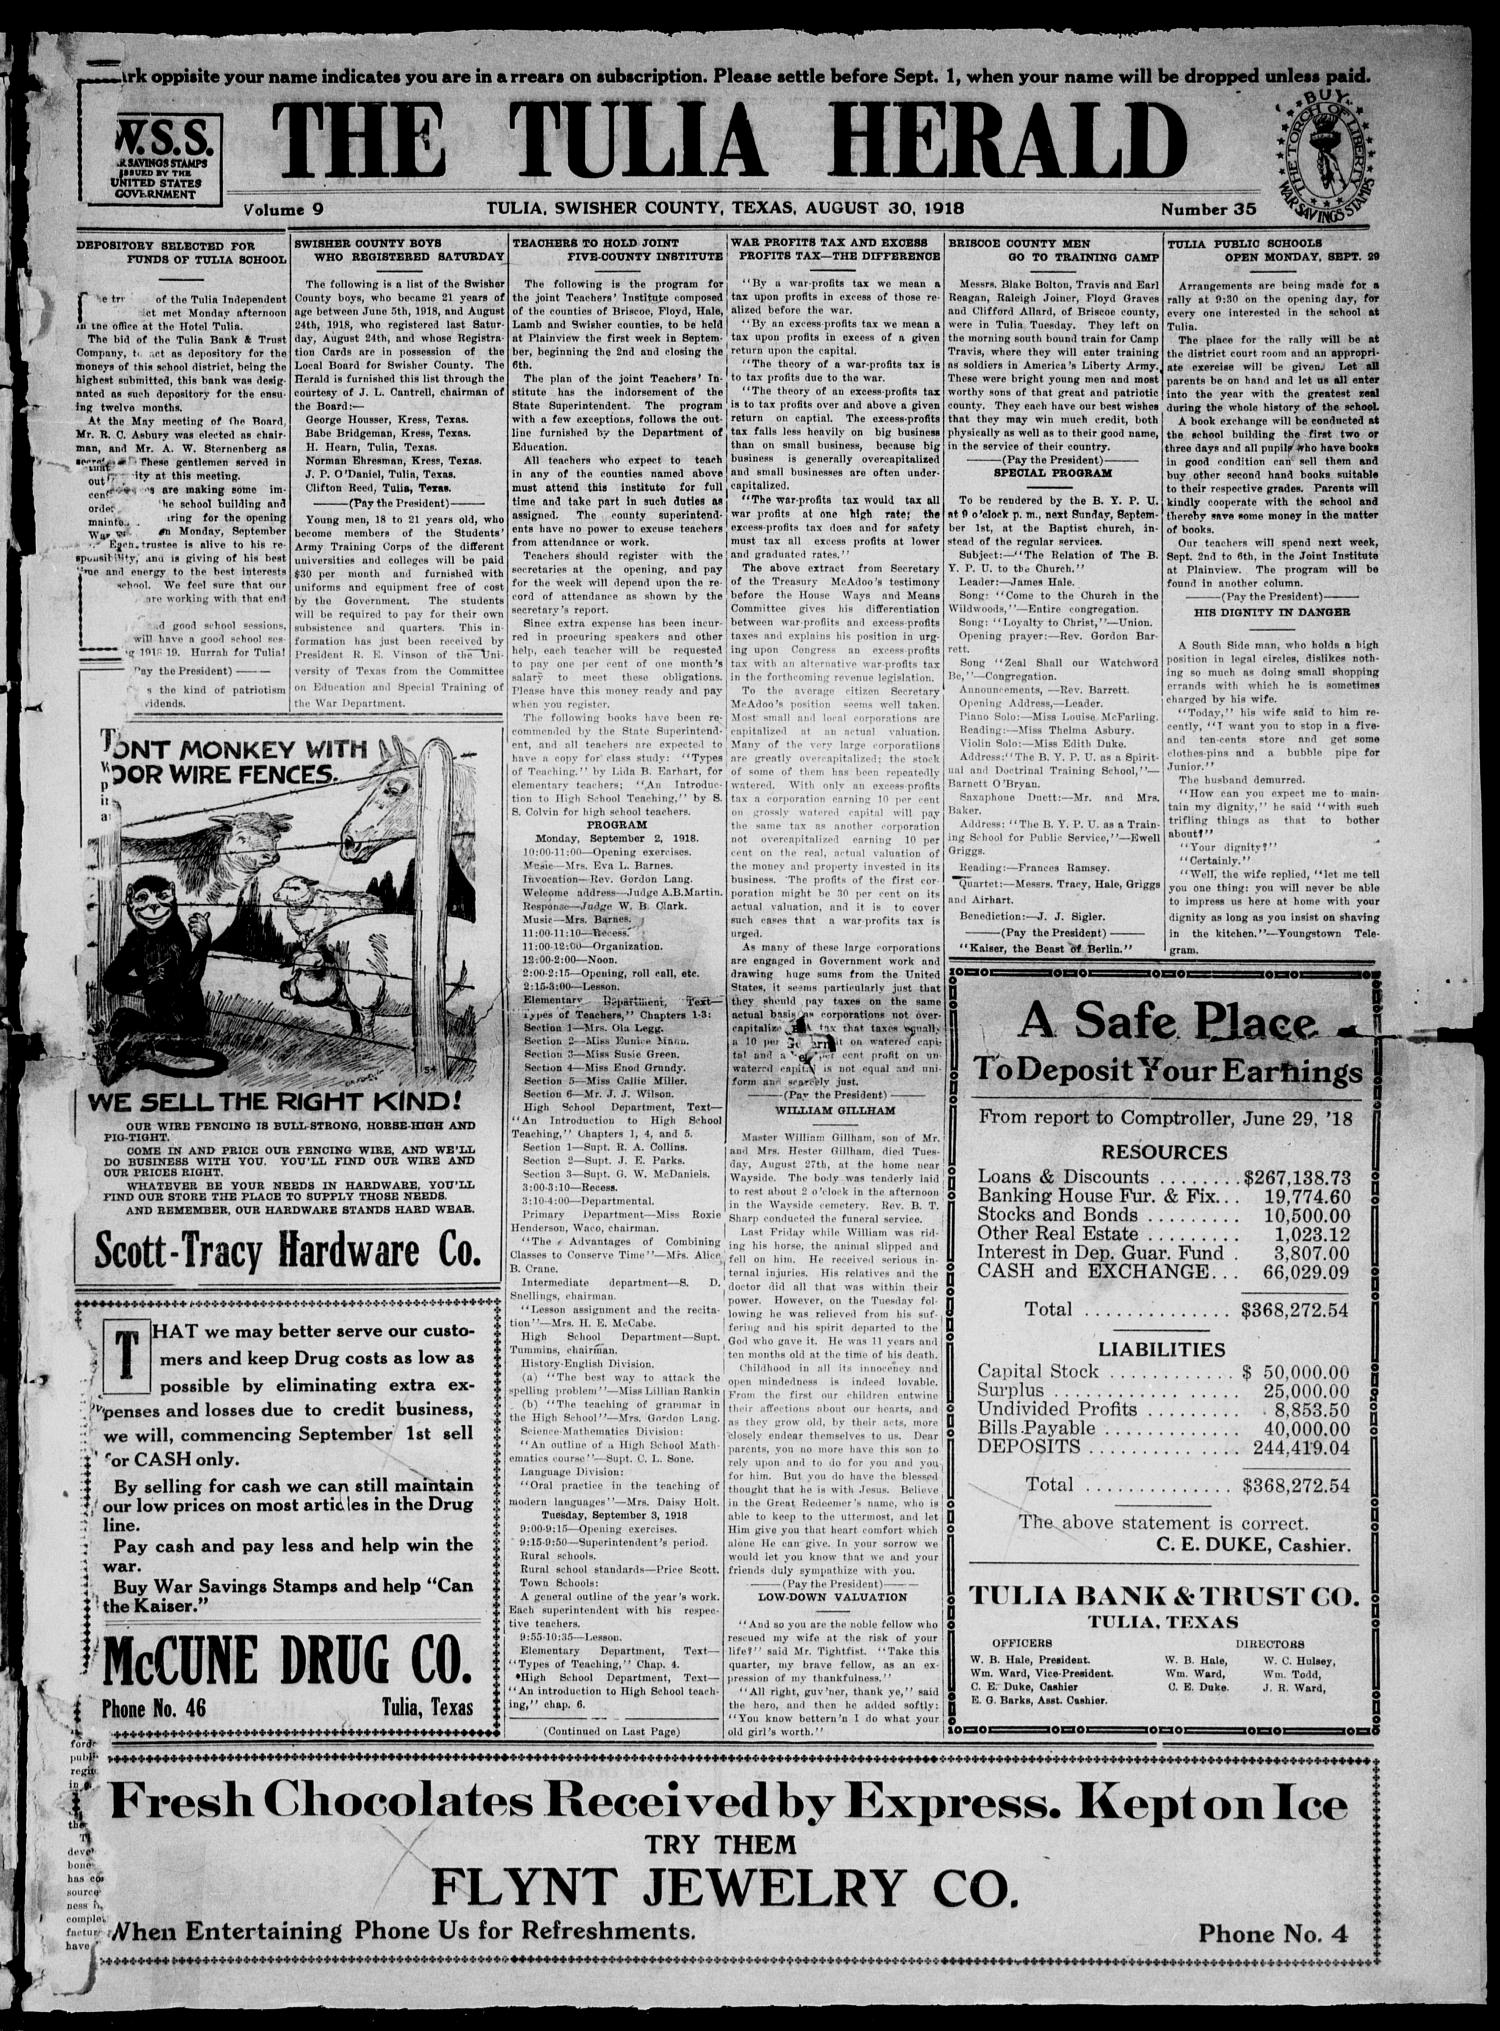 The Tulia Herald (Tulia, Tex), Vol. 9, No. 35, Ed. 1, Friday, August 30, 1918
                                                
                                                    1
                                                